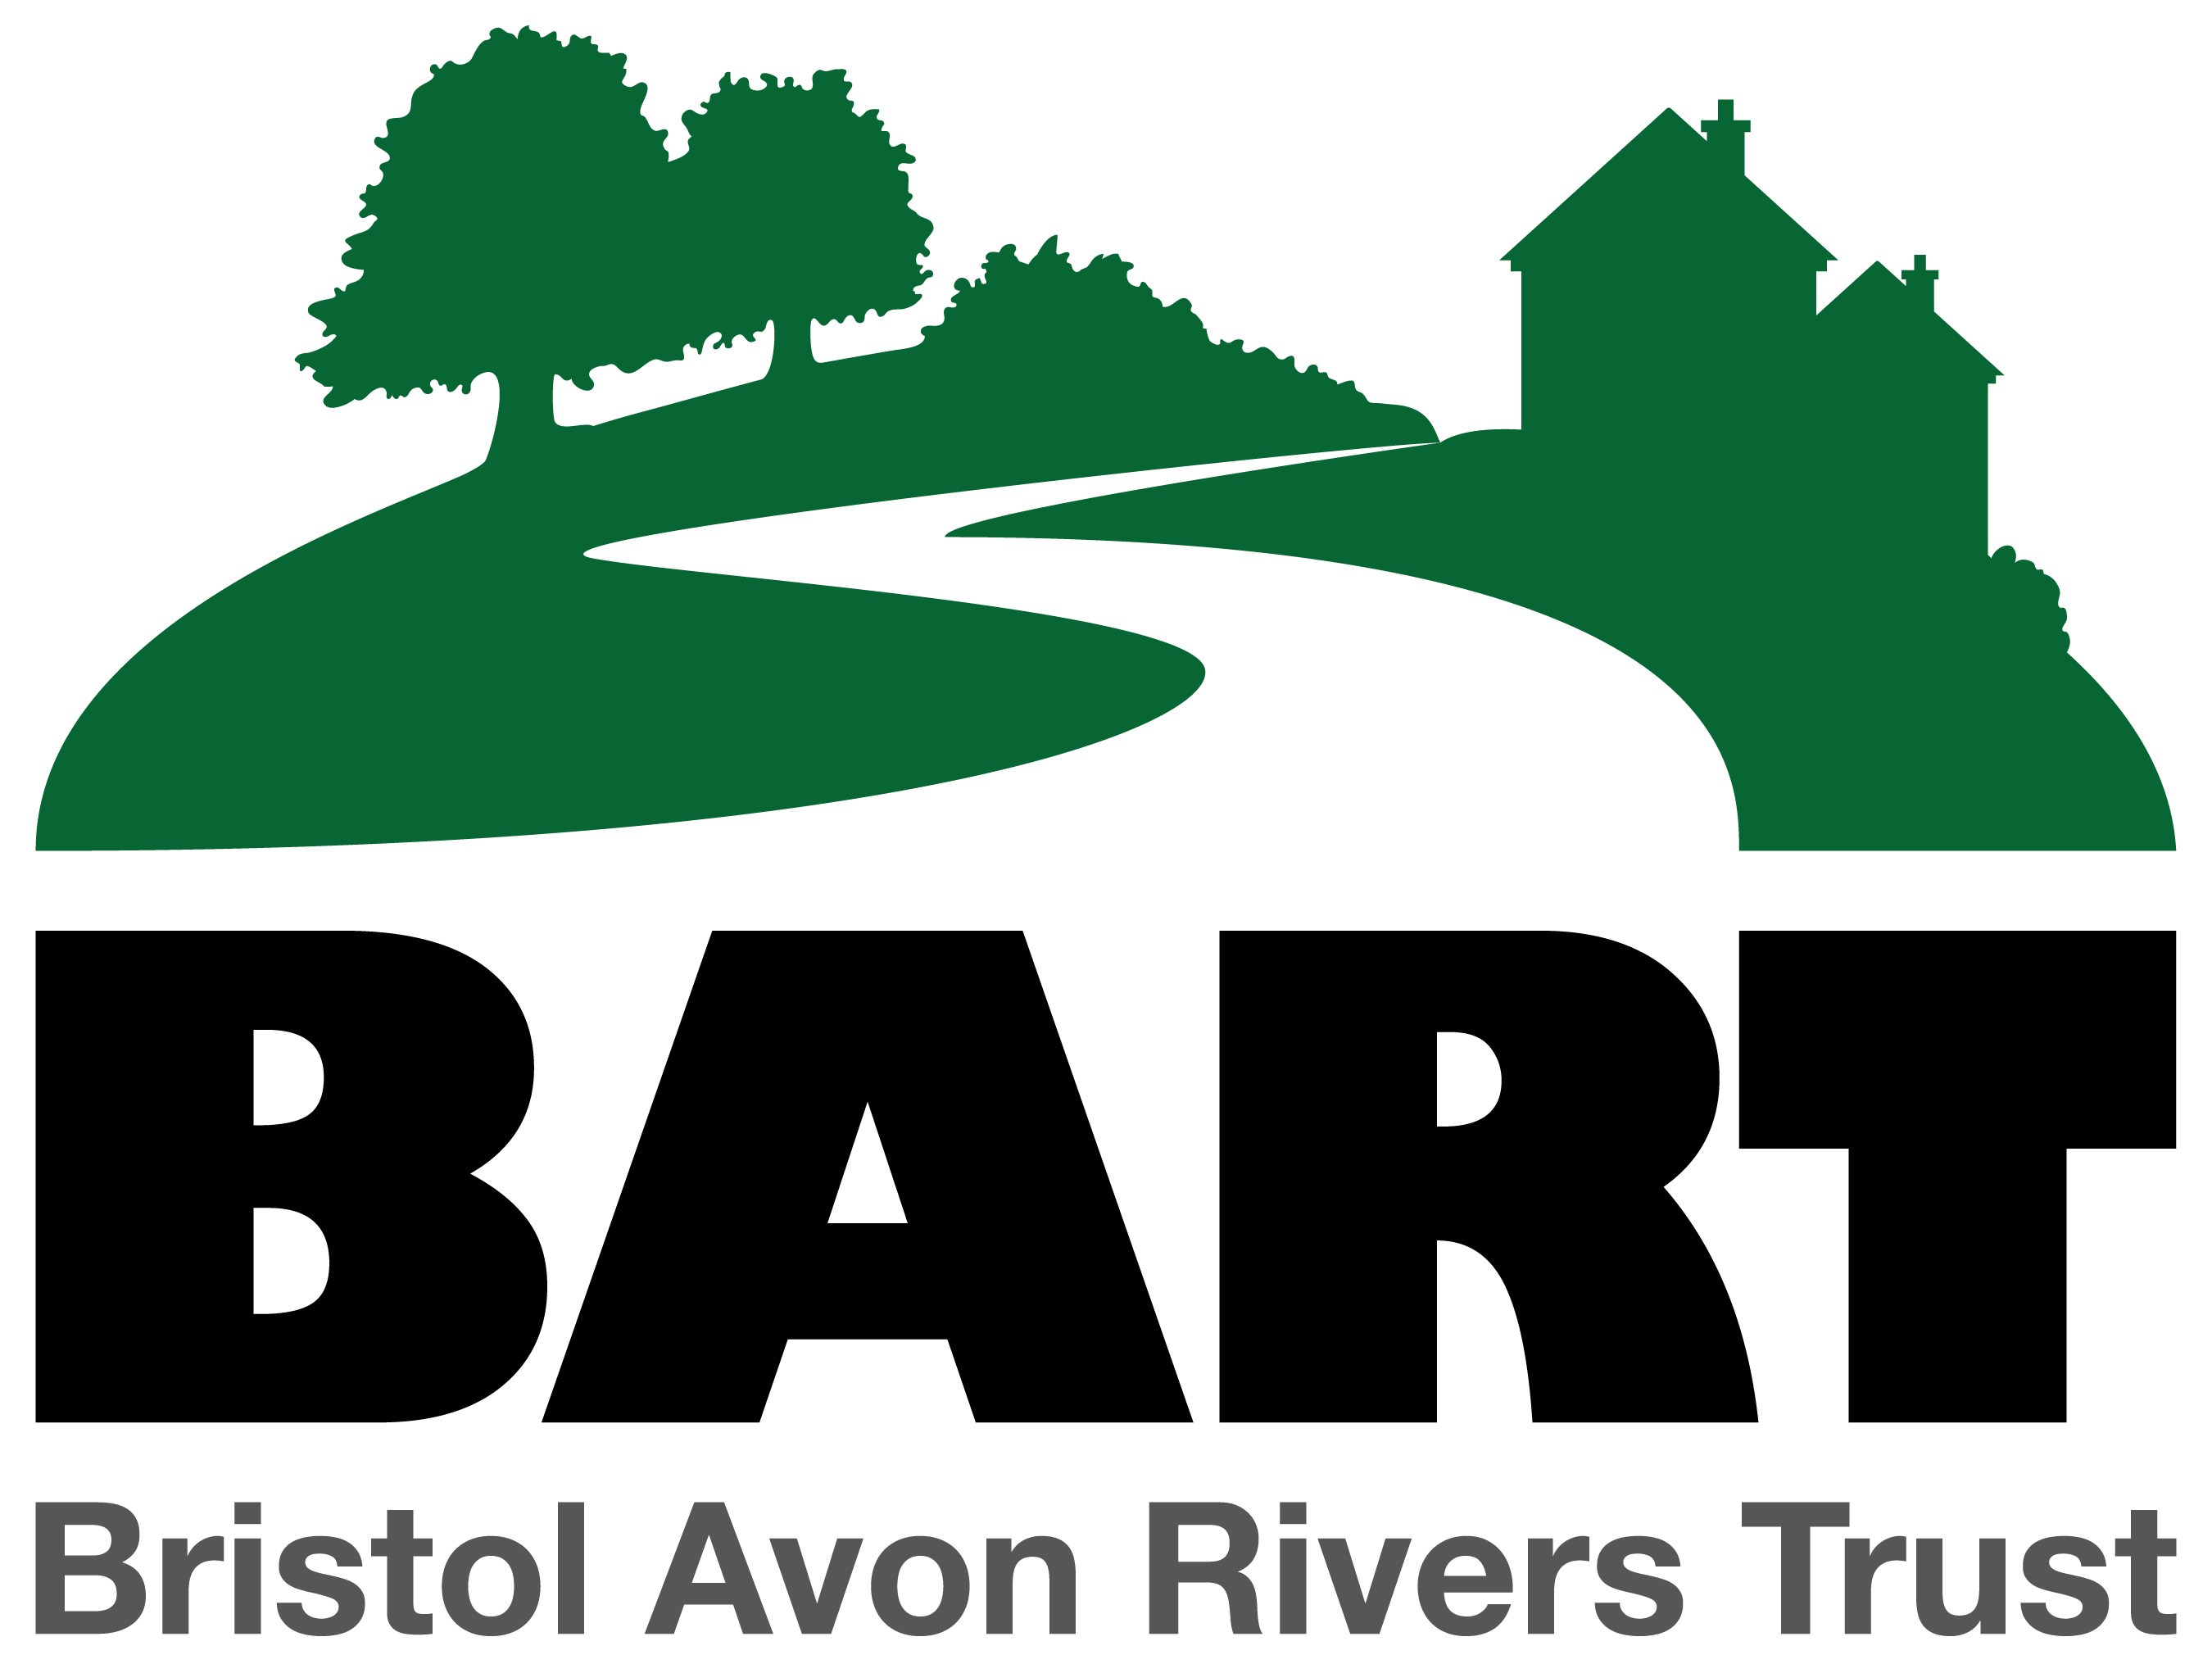 Bristol Avon Rivers Trust